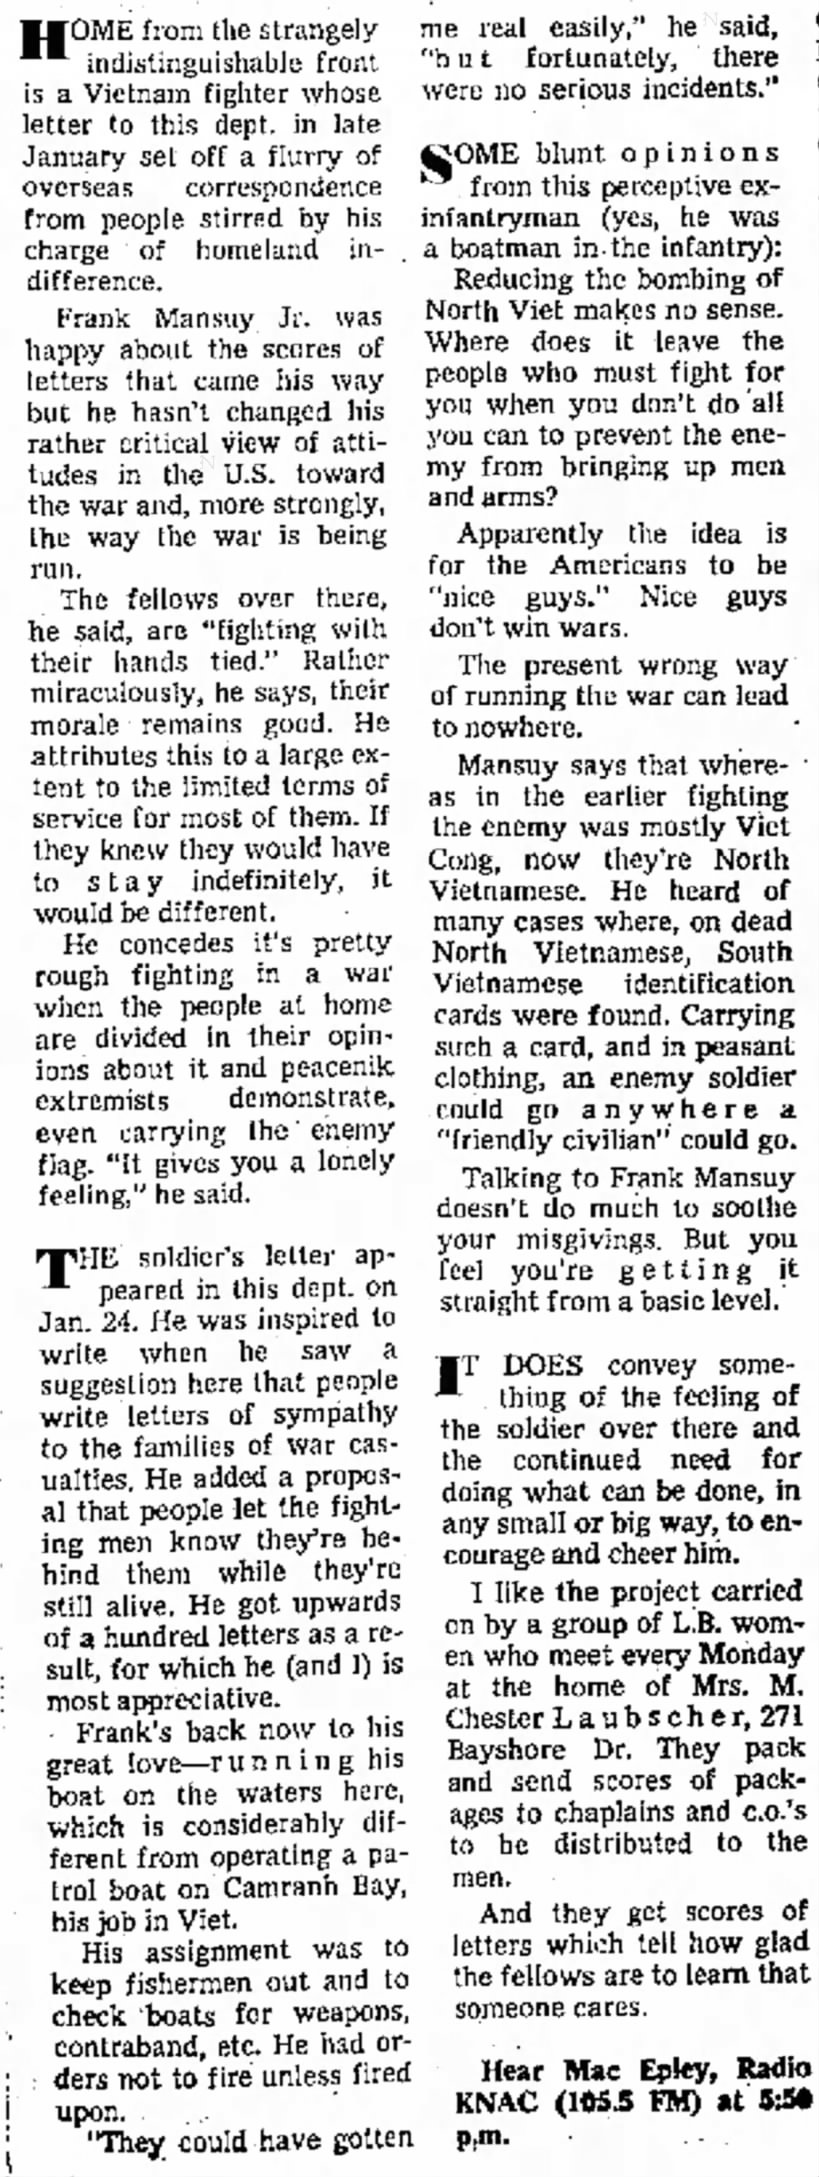 Frank Leo Mansuy Jr. Vietnam Letter Part 2